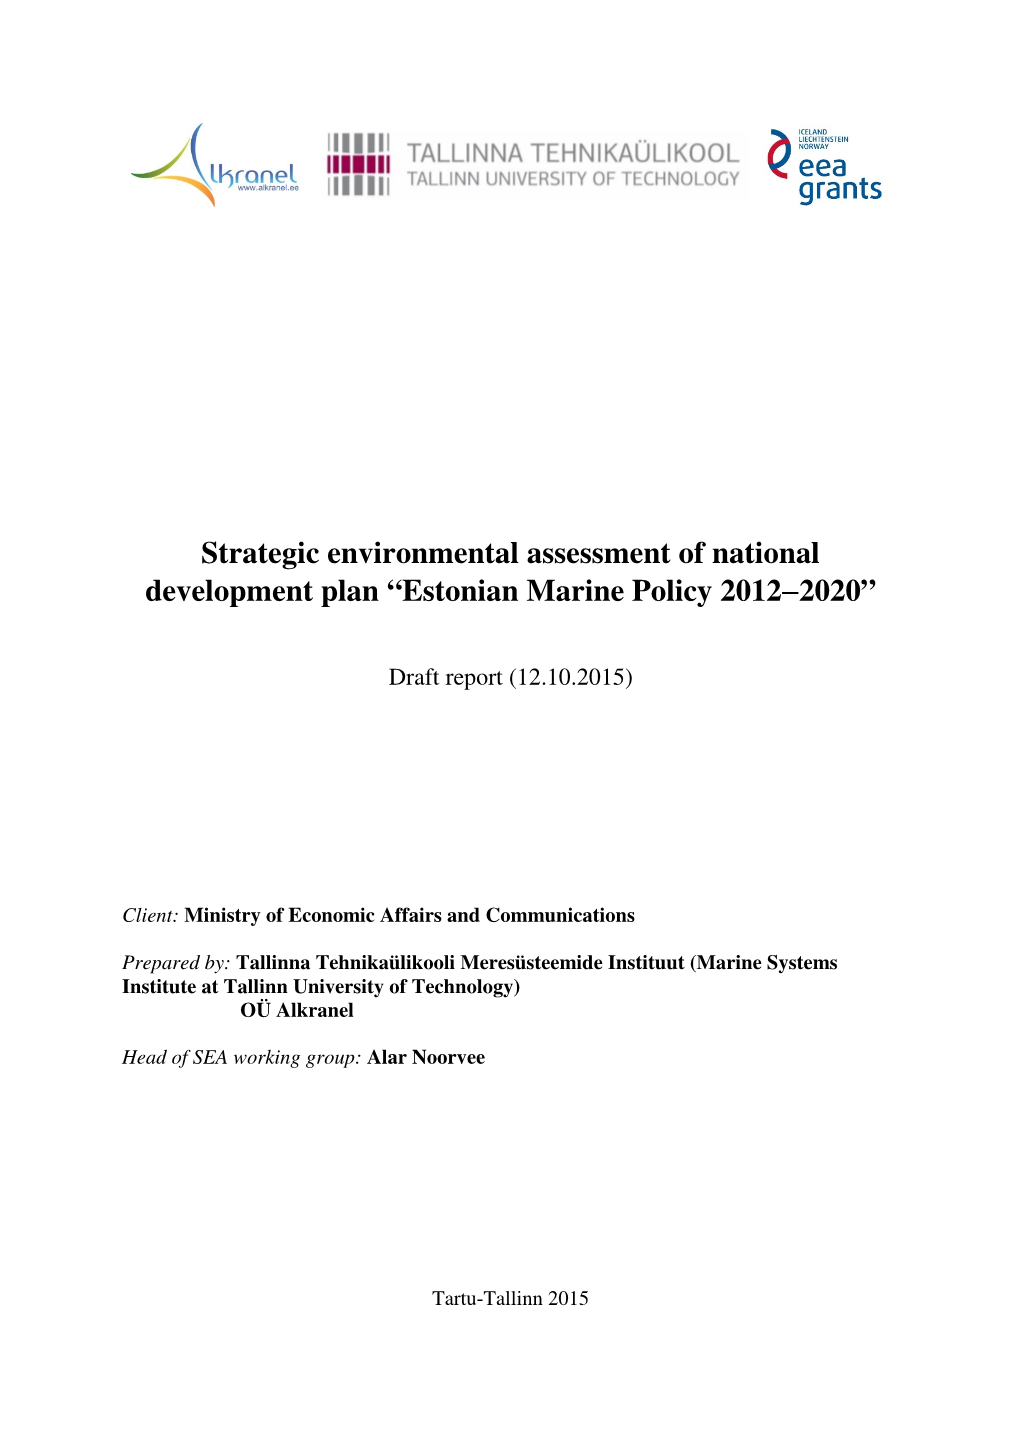 Strategic Environmental Assessment of National Development Plan “Estonian Marine Policy 2012 −−−2020”